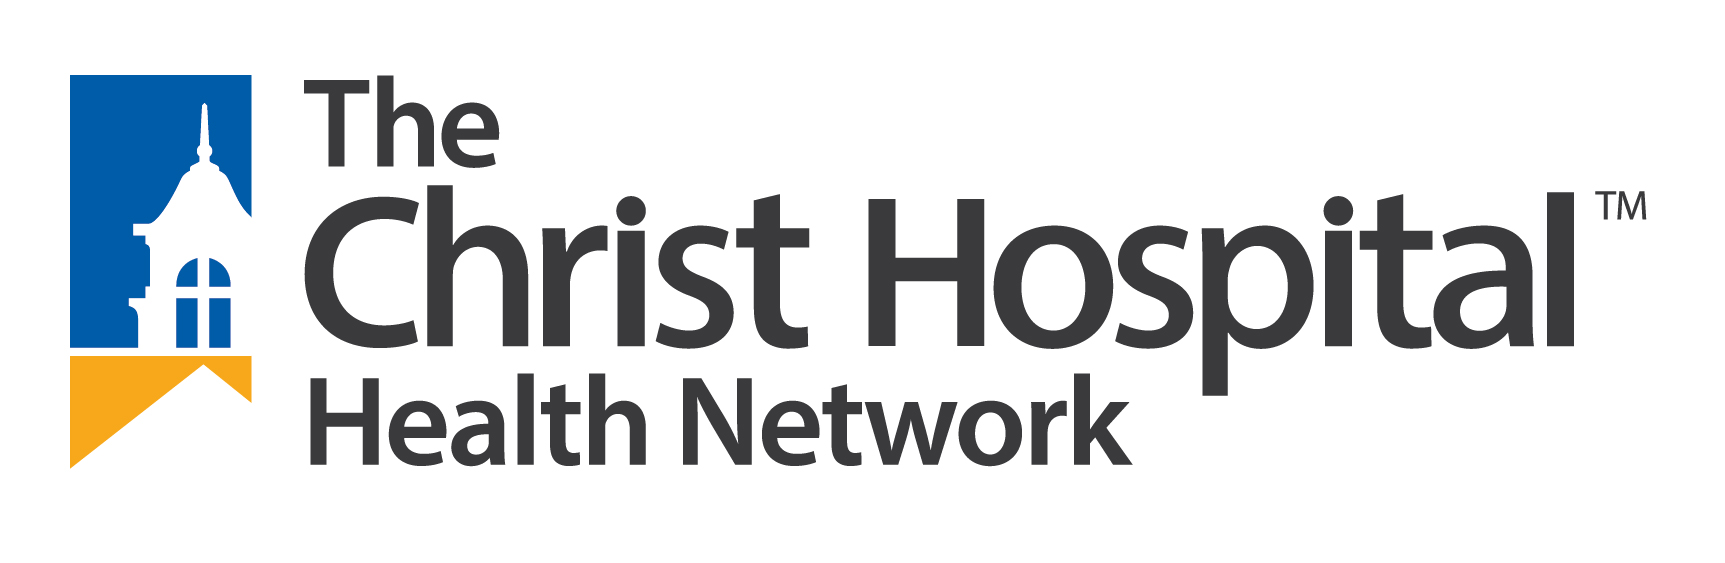 TheChristHosp_HealthNet_Logo